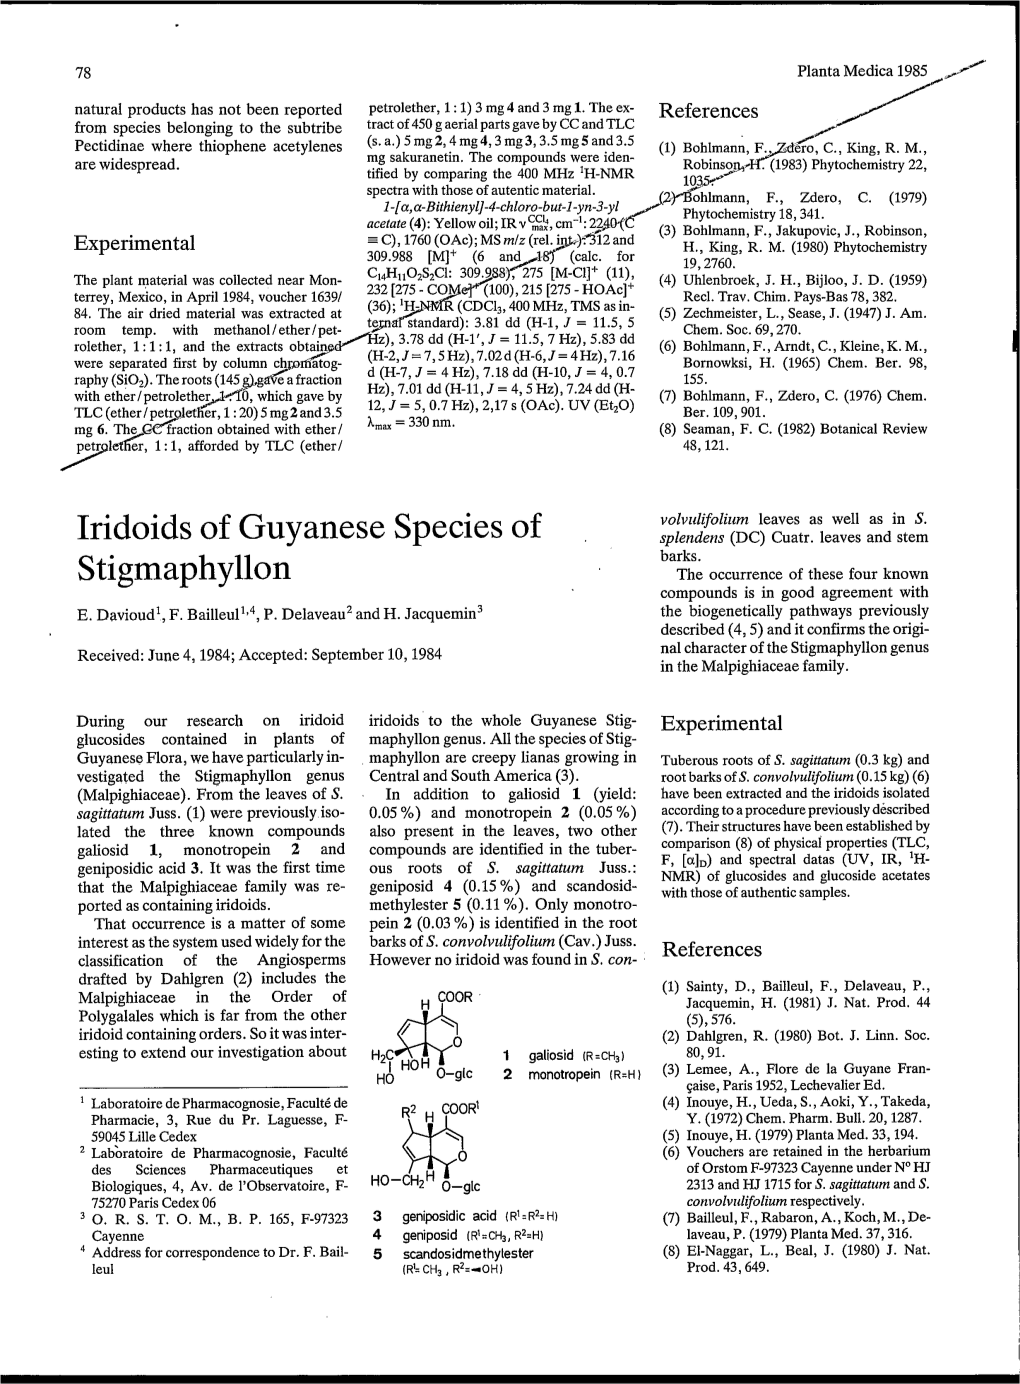 Iridoids of Guyanese Species of Stigmaphyllon